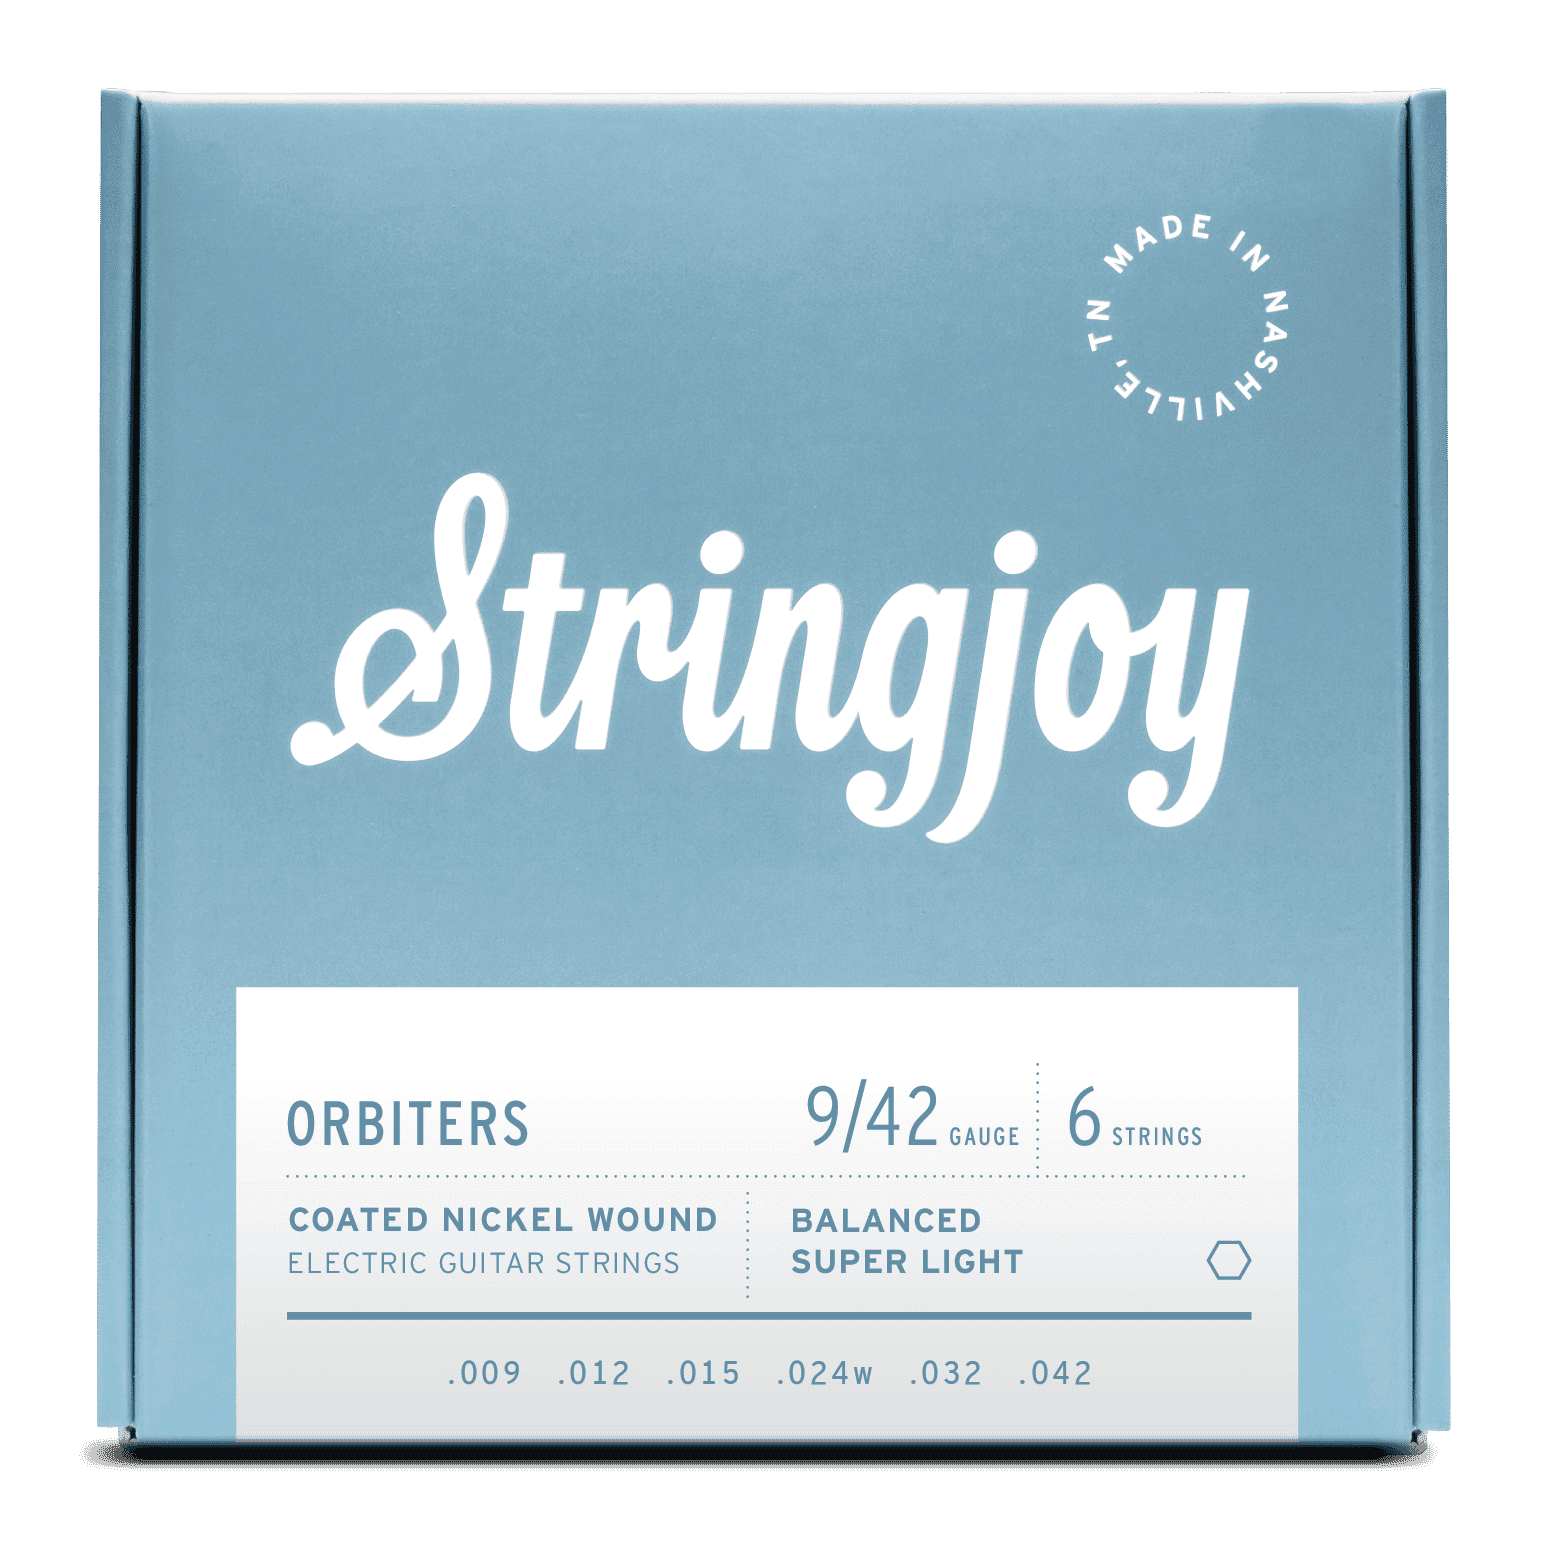 Stringjoy Orbiters | Balanced Super Light Gauge (9-42) Coated Nickel Wound Electric Guitar Strings | Jack's On Queen